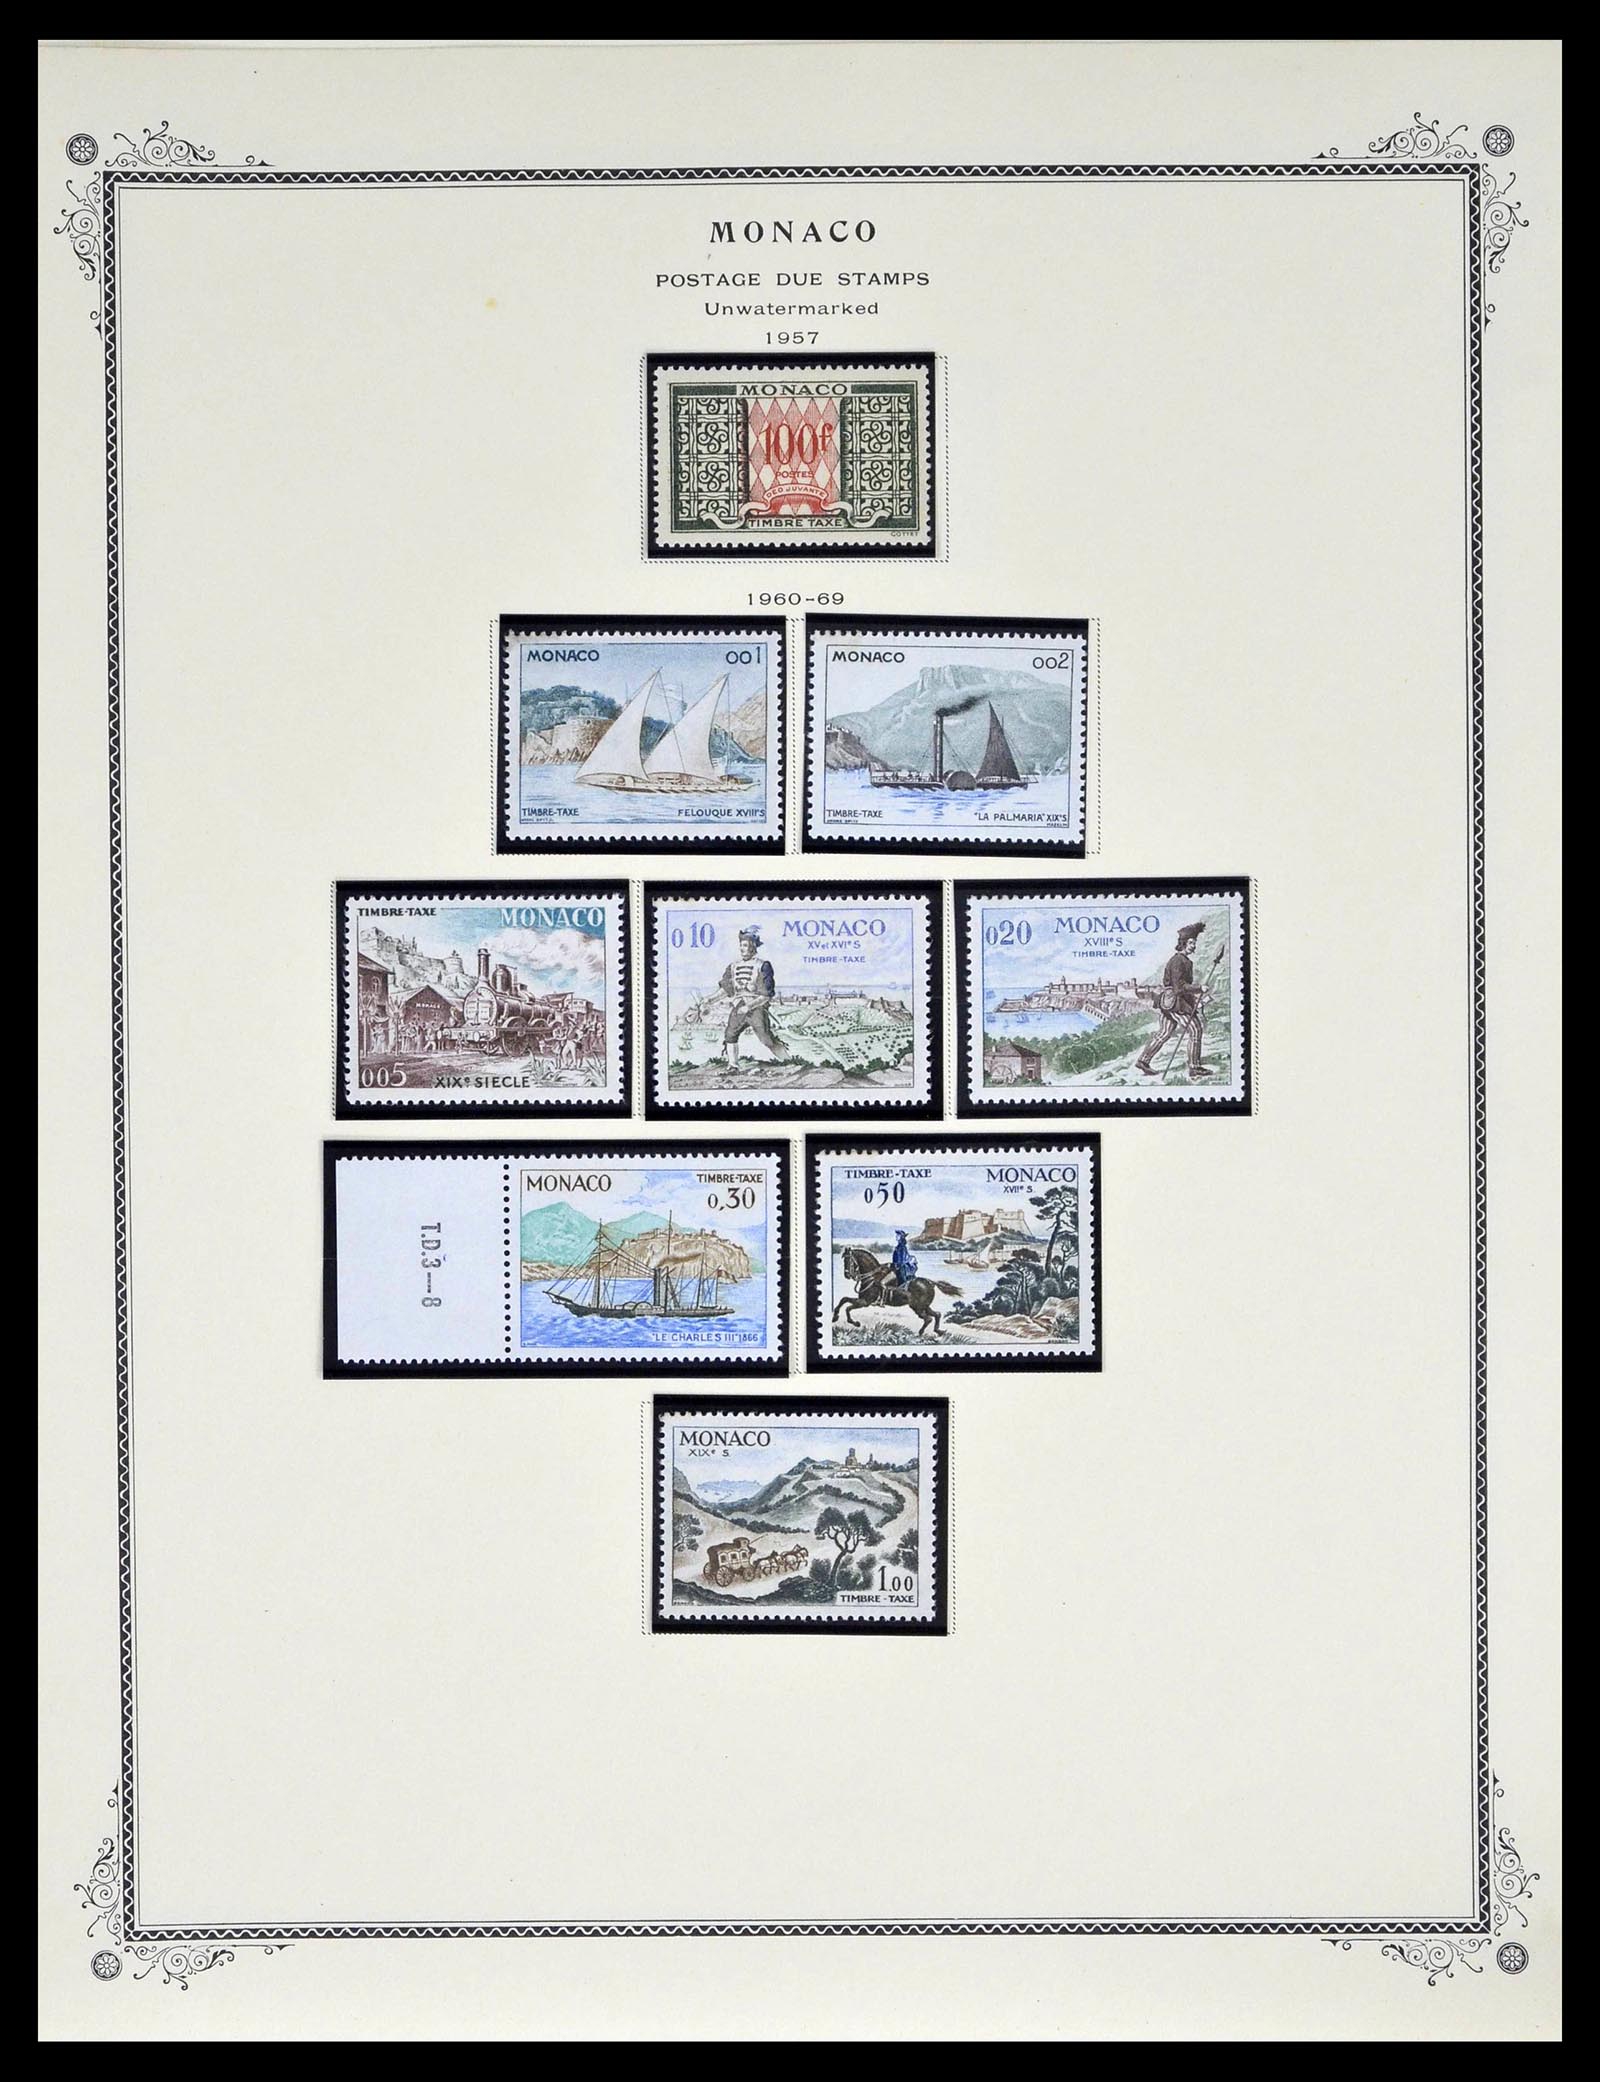 39181 0168 - Stamp collection 39181 Monaco 1885-1980.